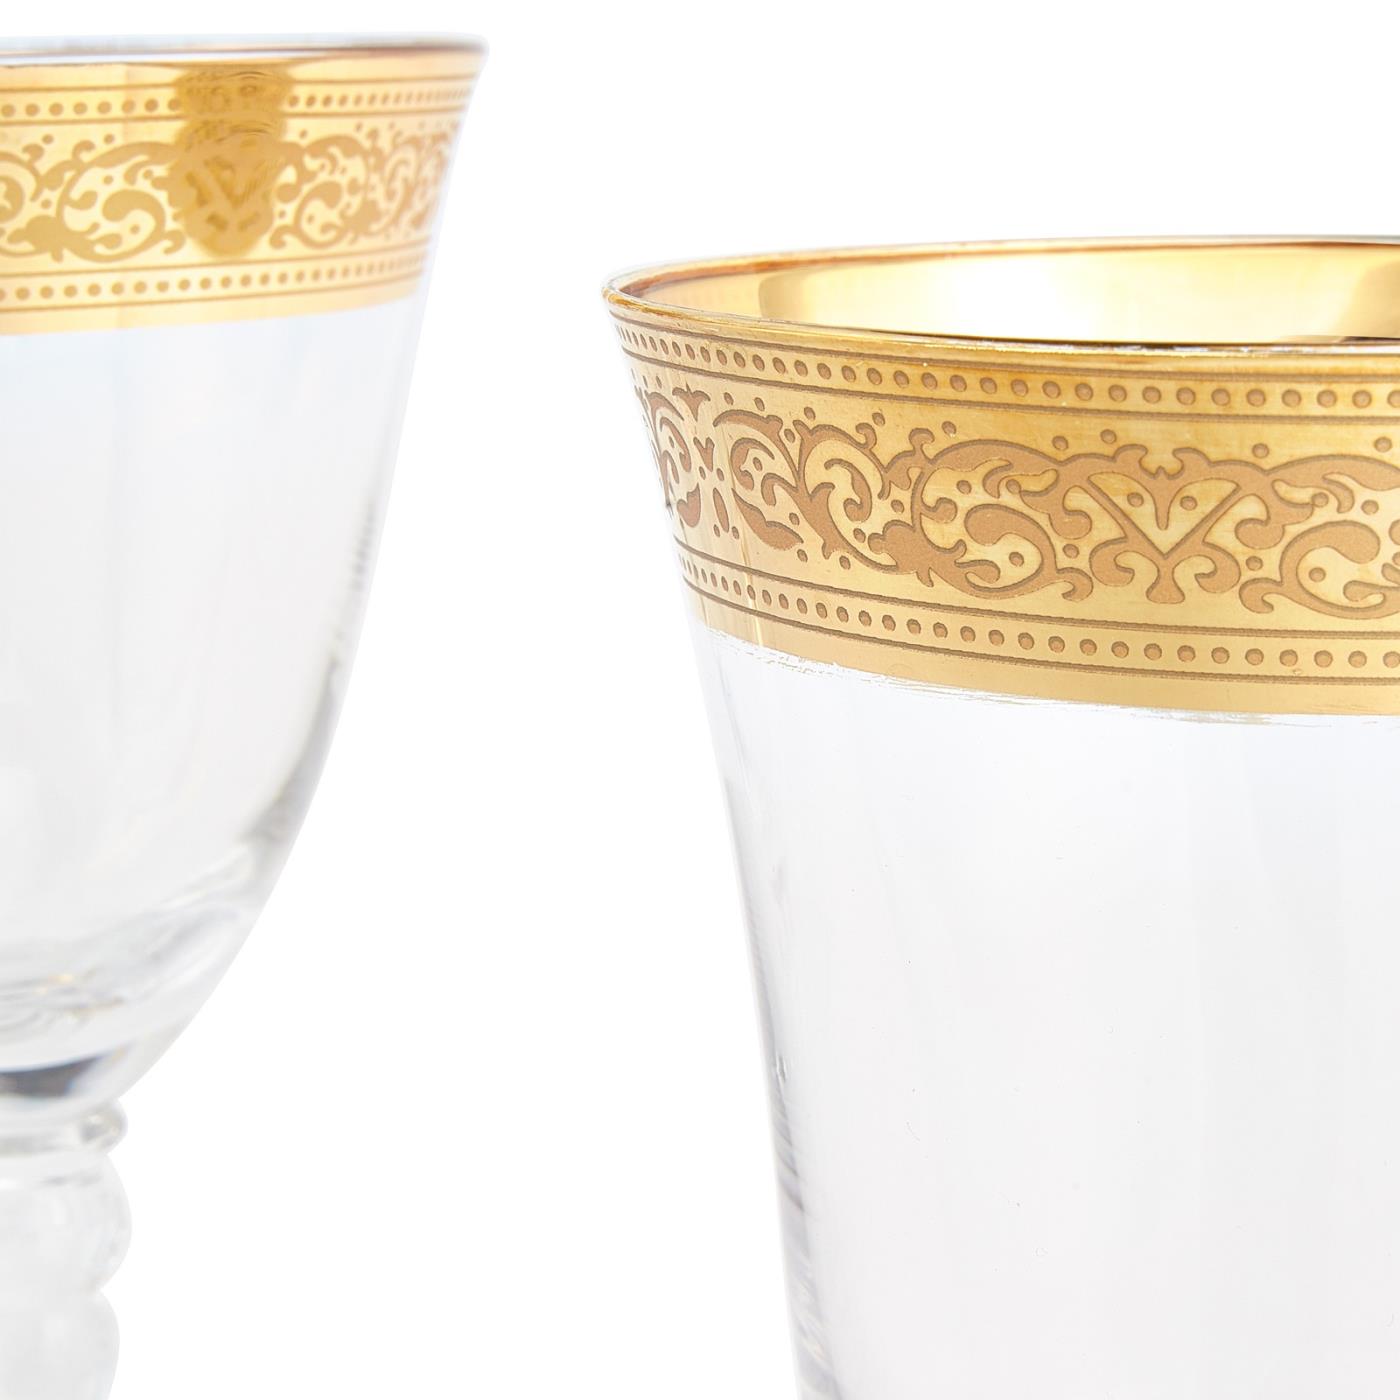 Rim Detail of Majestic Gold Glassware